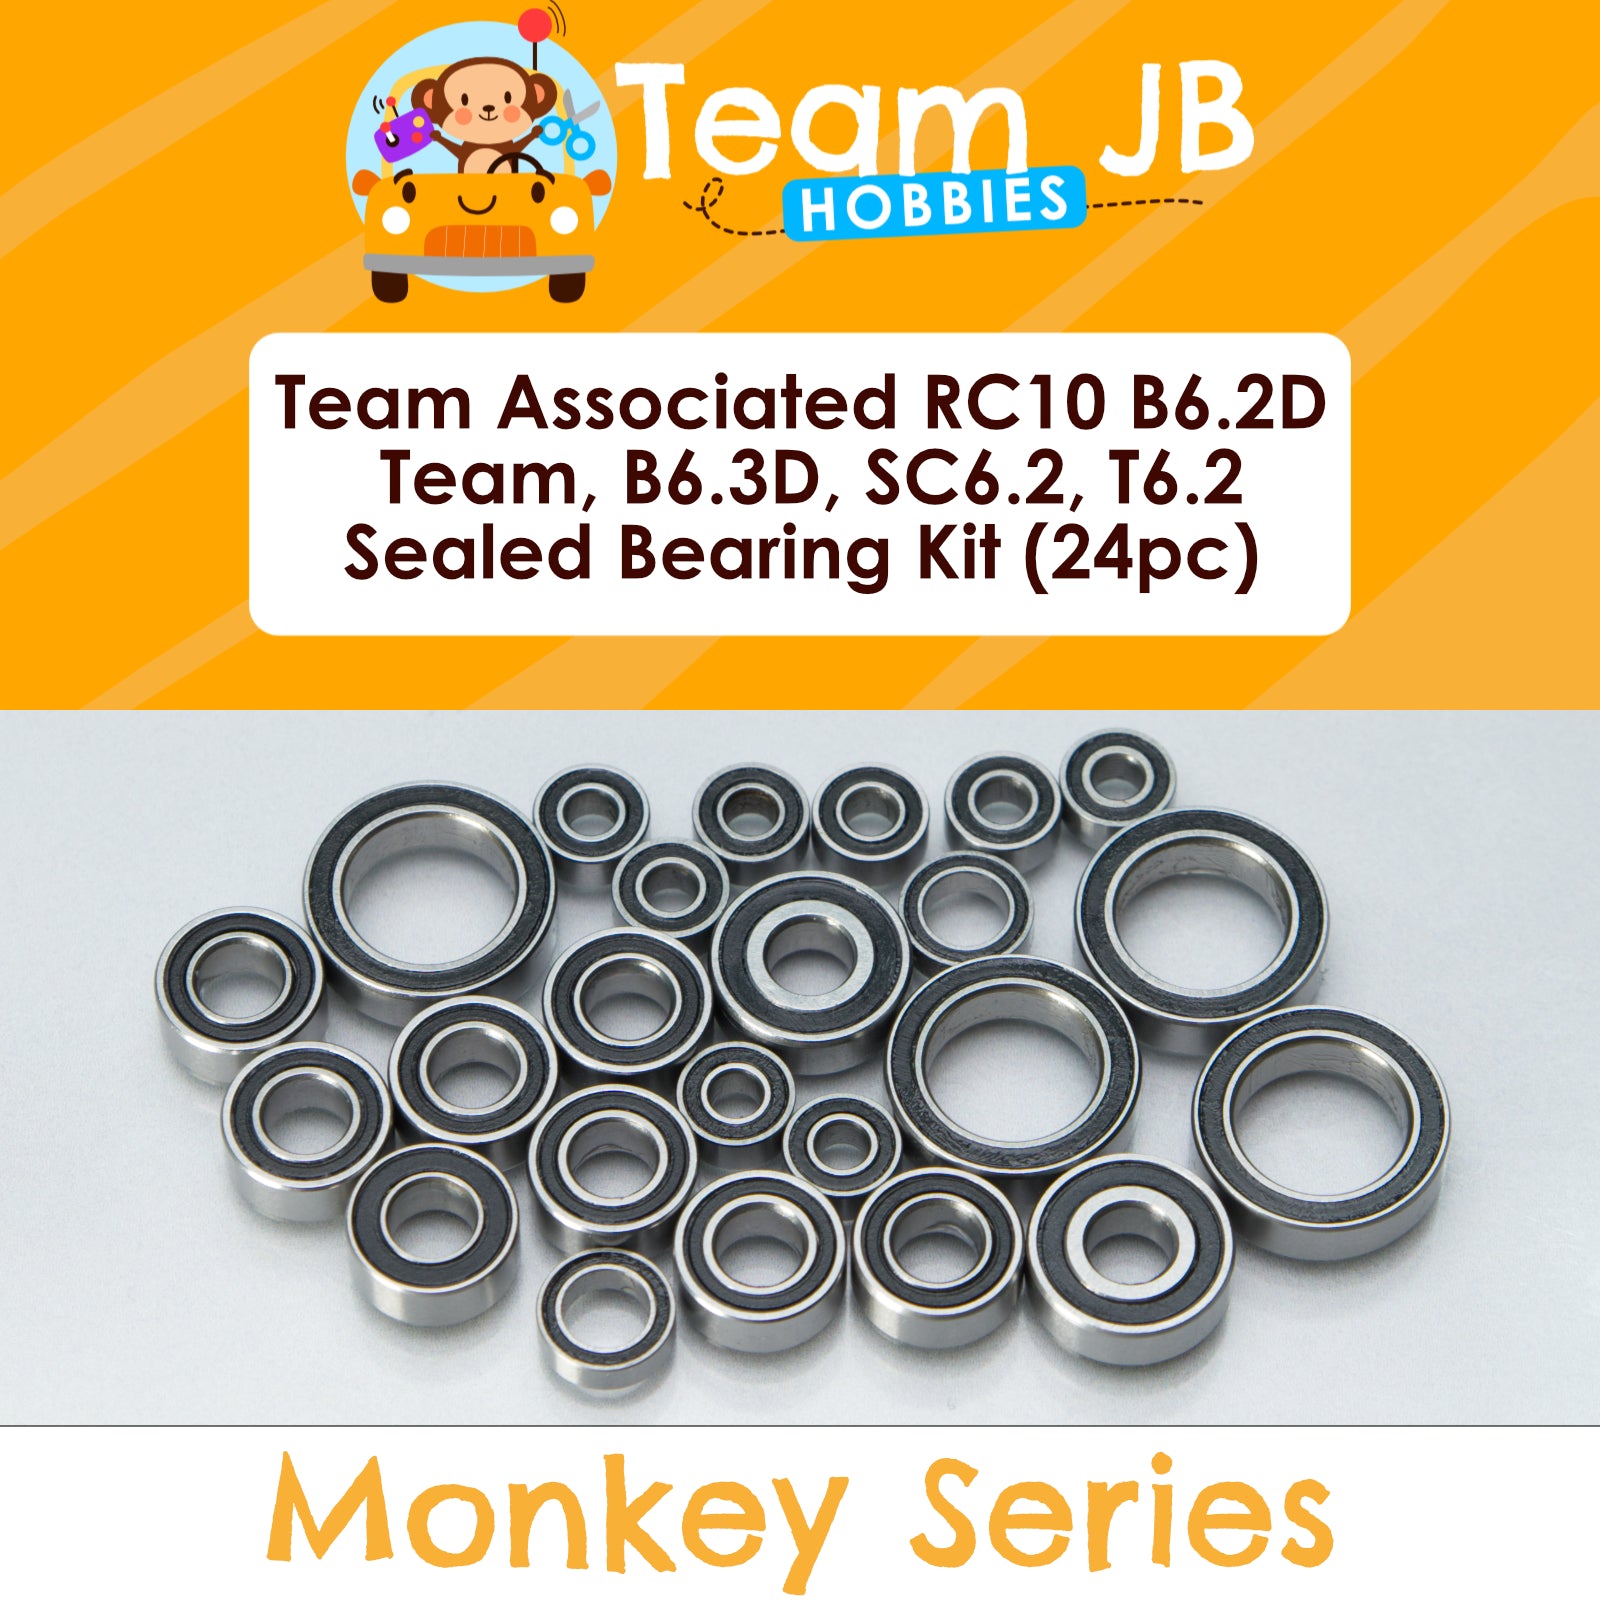 Team Associated RC10 B6.2D Team, RC10 B6.3D, SC6.2, T6.2 - Sealed Bearing Kit